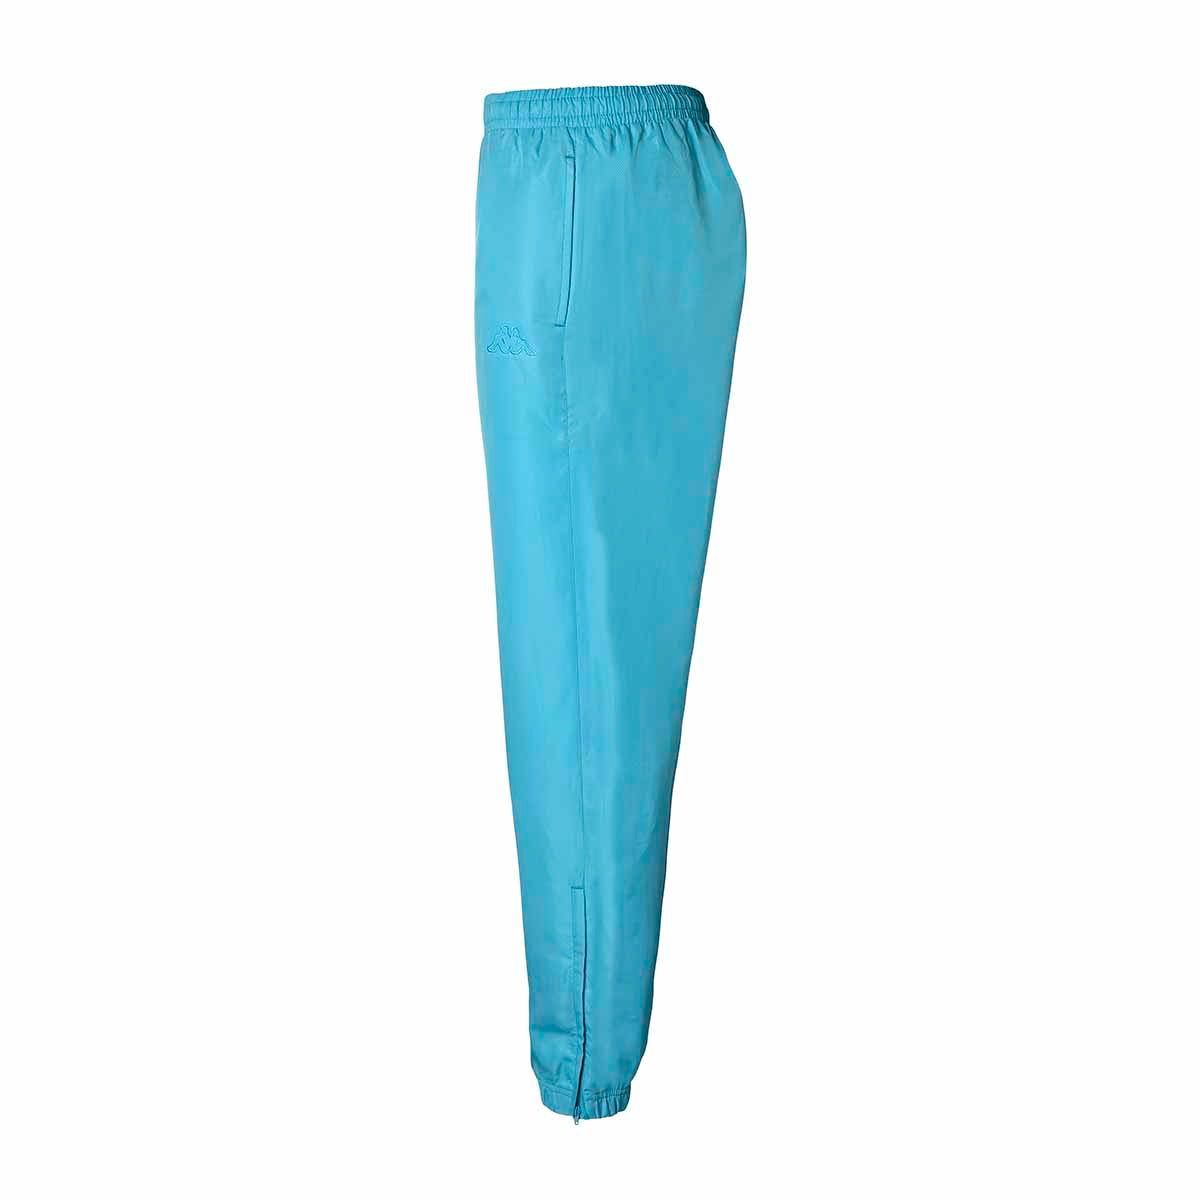 Pantalón Kappa Krismano - Ropa Ideal Para El Gim O Entrenar  MKP